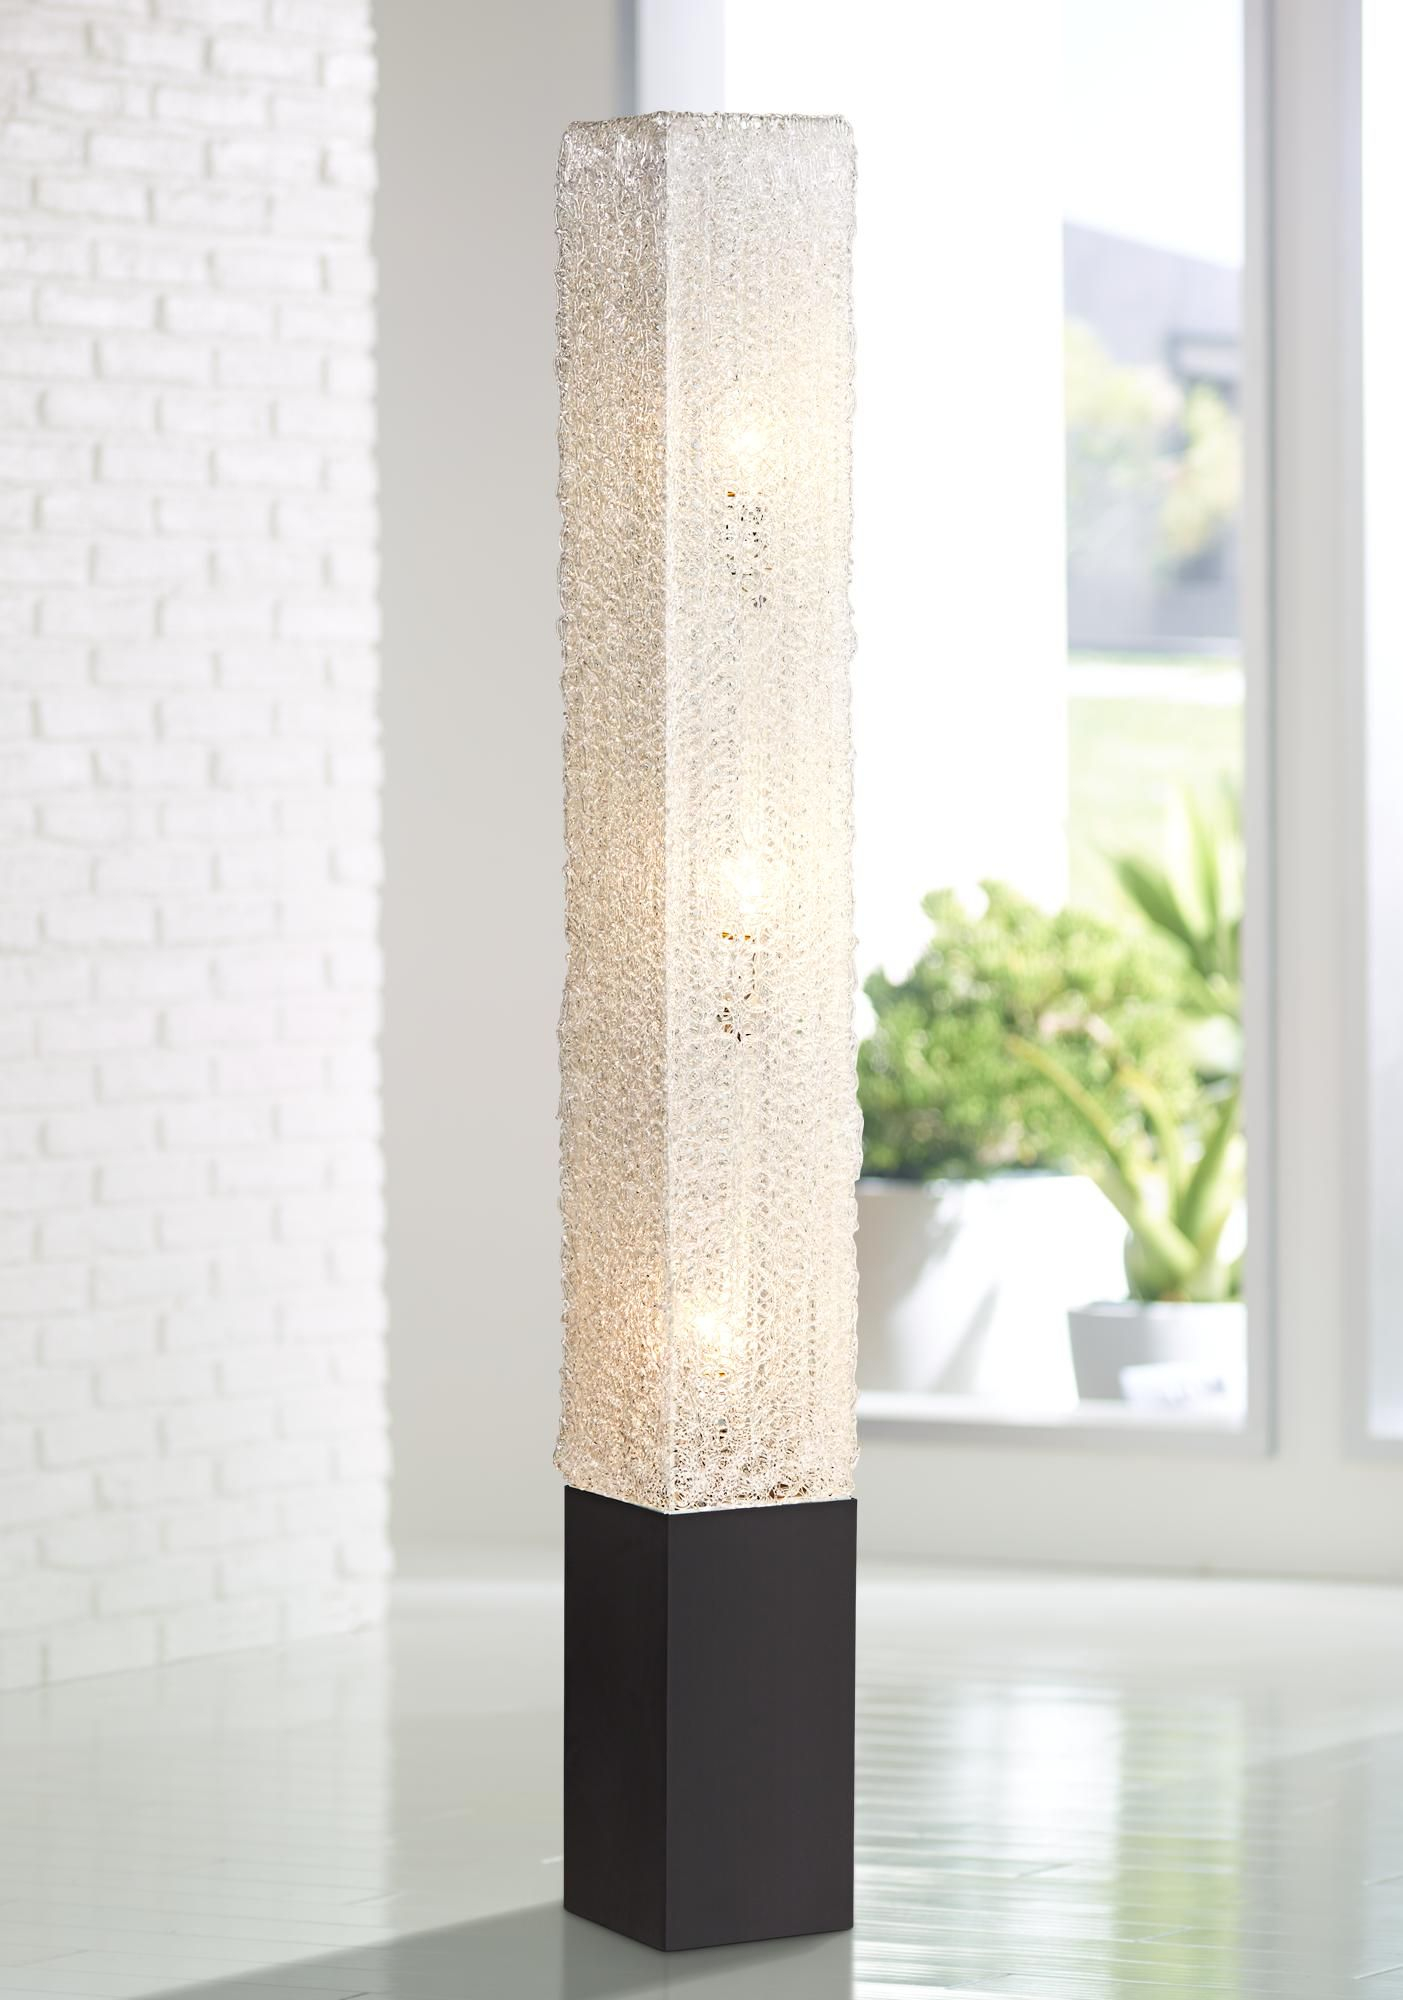 Diax Textured Clear Acrylic Rectangular Floor Lamp 21729 pertaining to size 1403 X 2000